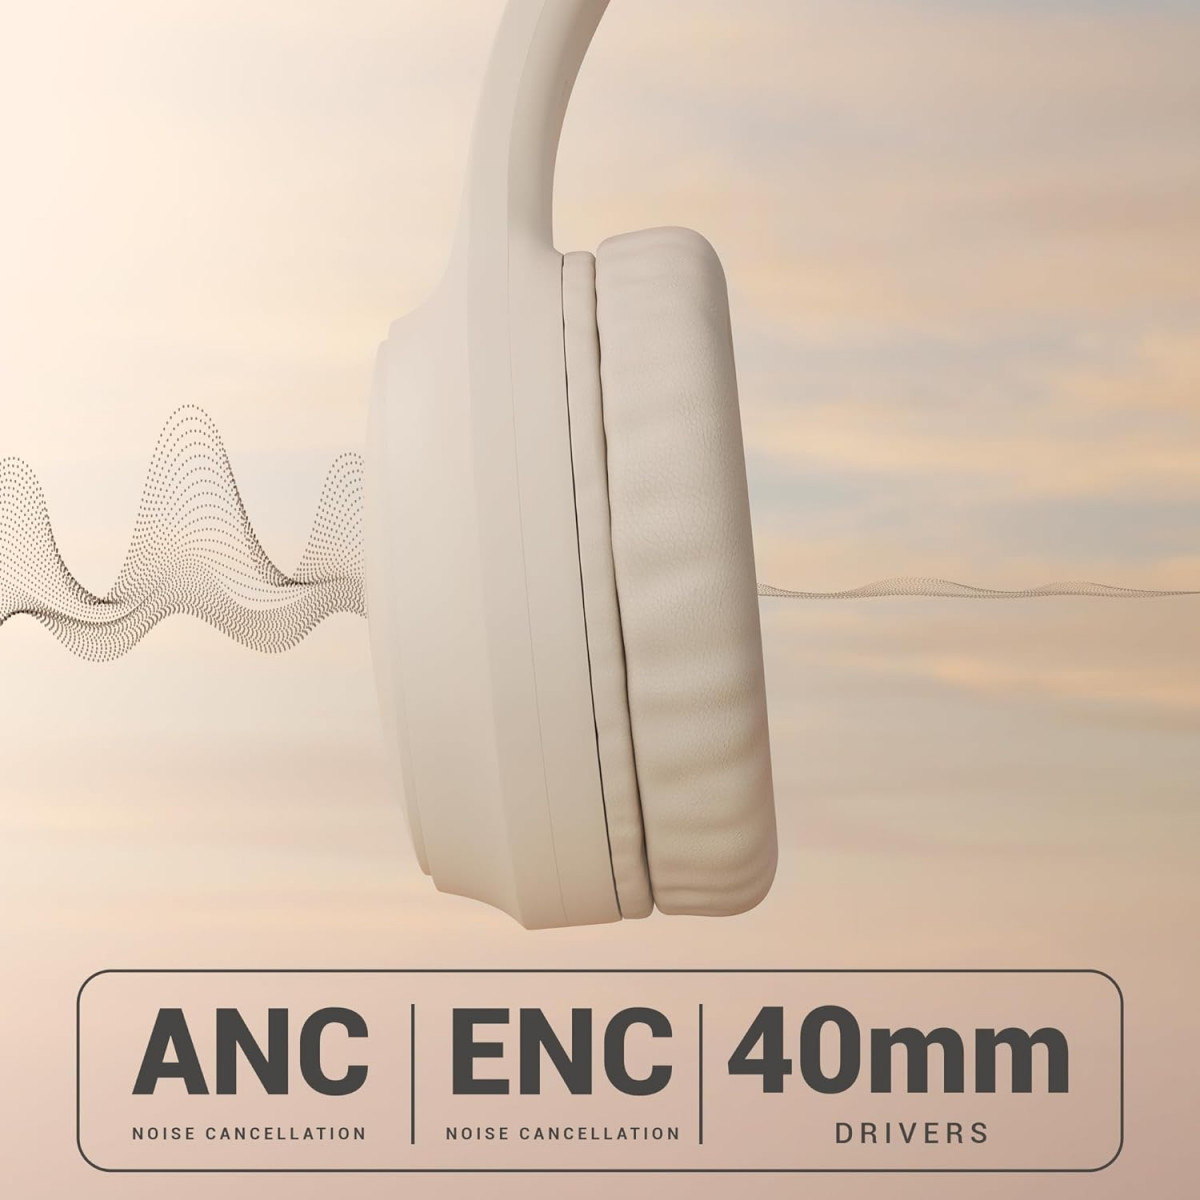 ZEBRONICS New Launch AEON Wireless Headphone with 110h Battery Backup Beige